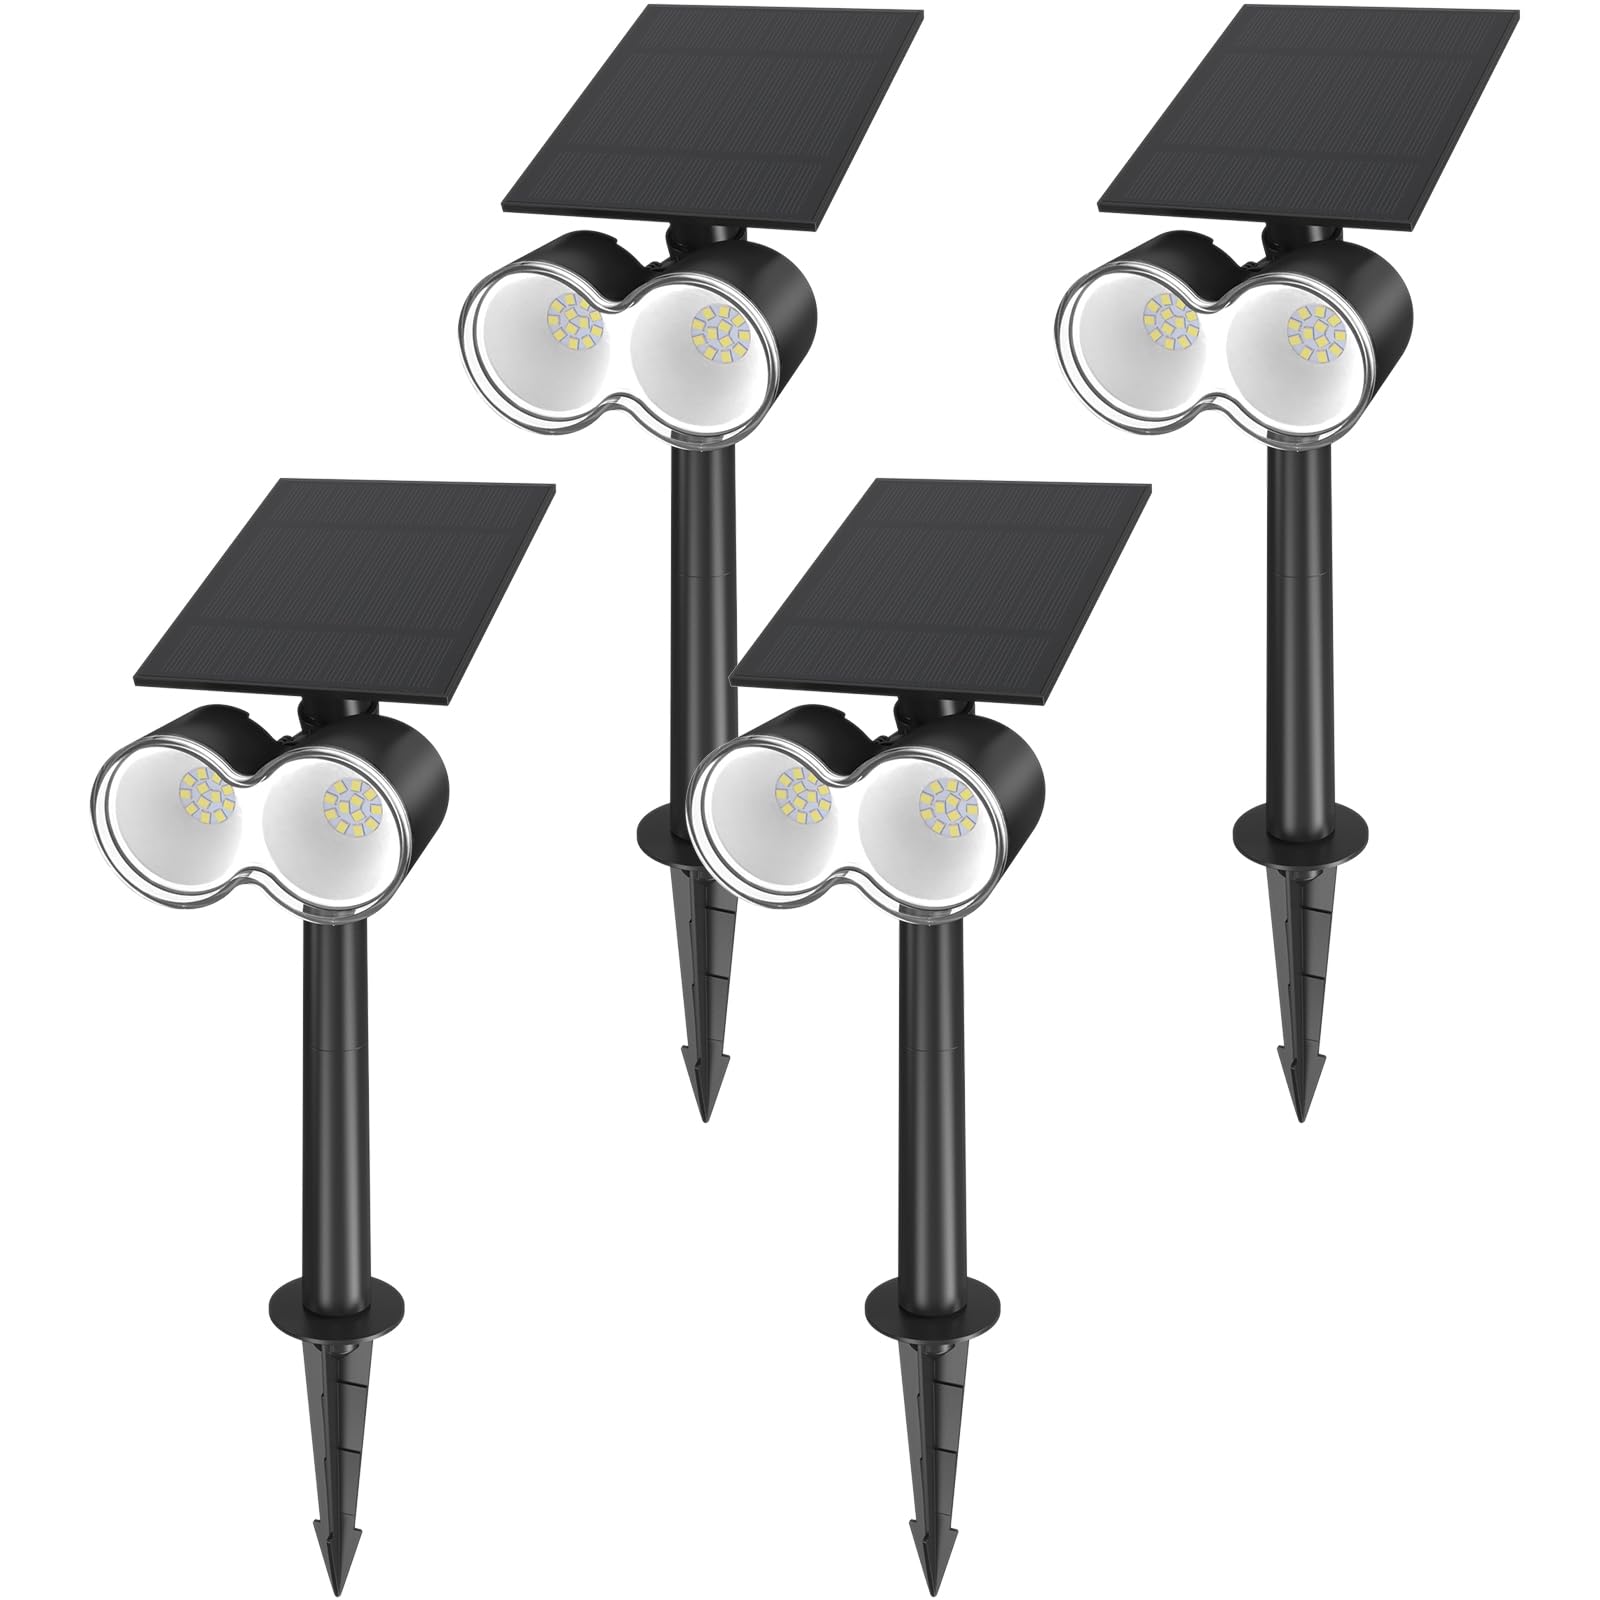 Solar Spot Lights,6500K,360°Horizontal Adjustable,3 Modes,Auto ON/OFF,4 Packs,WX 6500K 4 - Barrina led